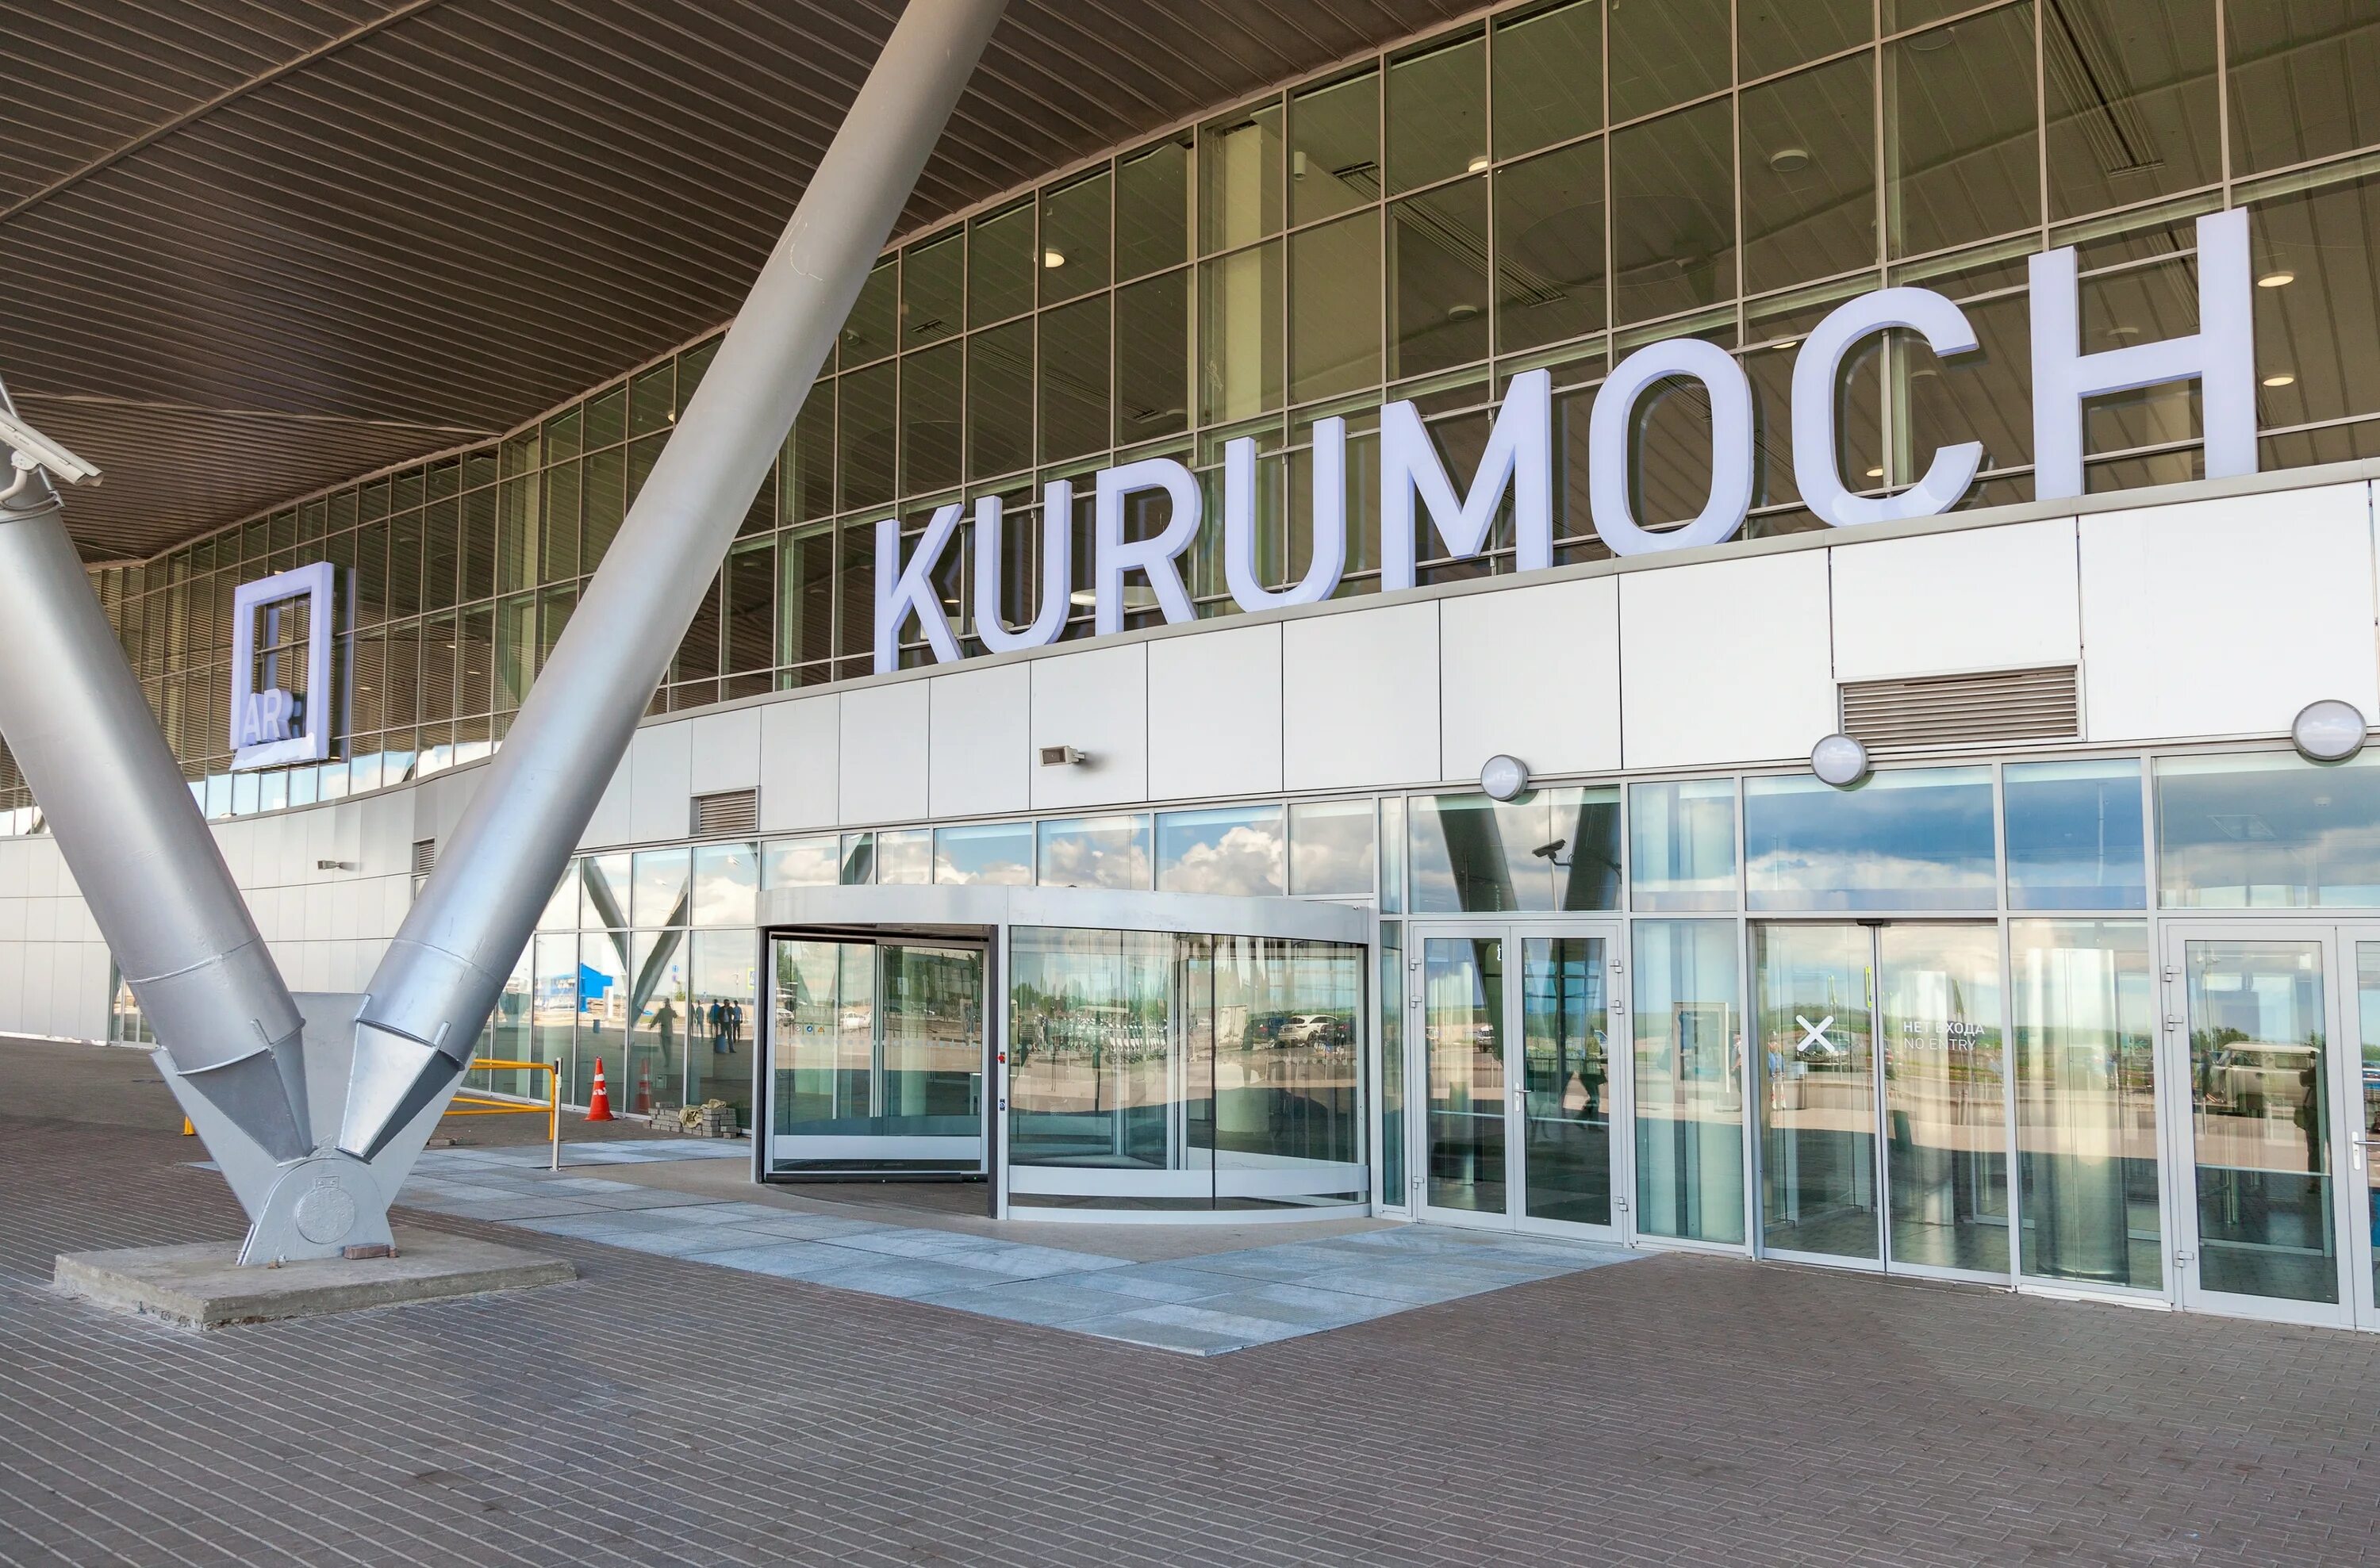 Прилеты сегодня аэропорт курумоч самара. Международный аэропорт «Курумоч» (Самара). Международный аэропорт Самара Курумоч имени с. п. Королева. Аэропорт Курумоч фото. Курумоч летом фото.